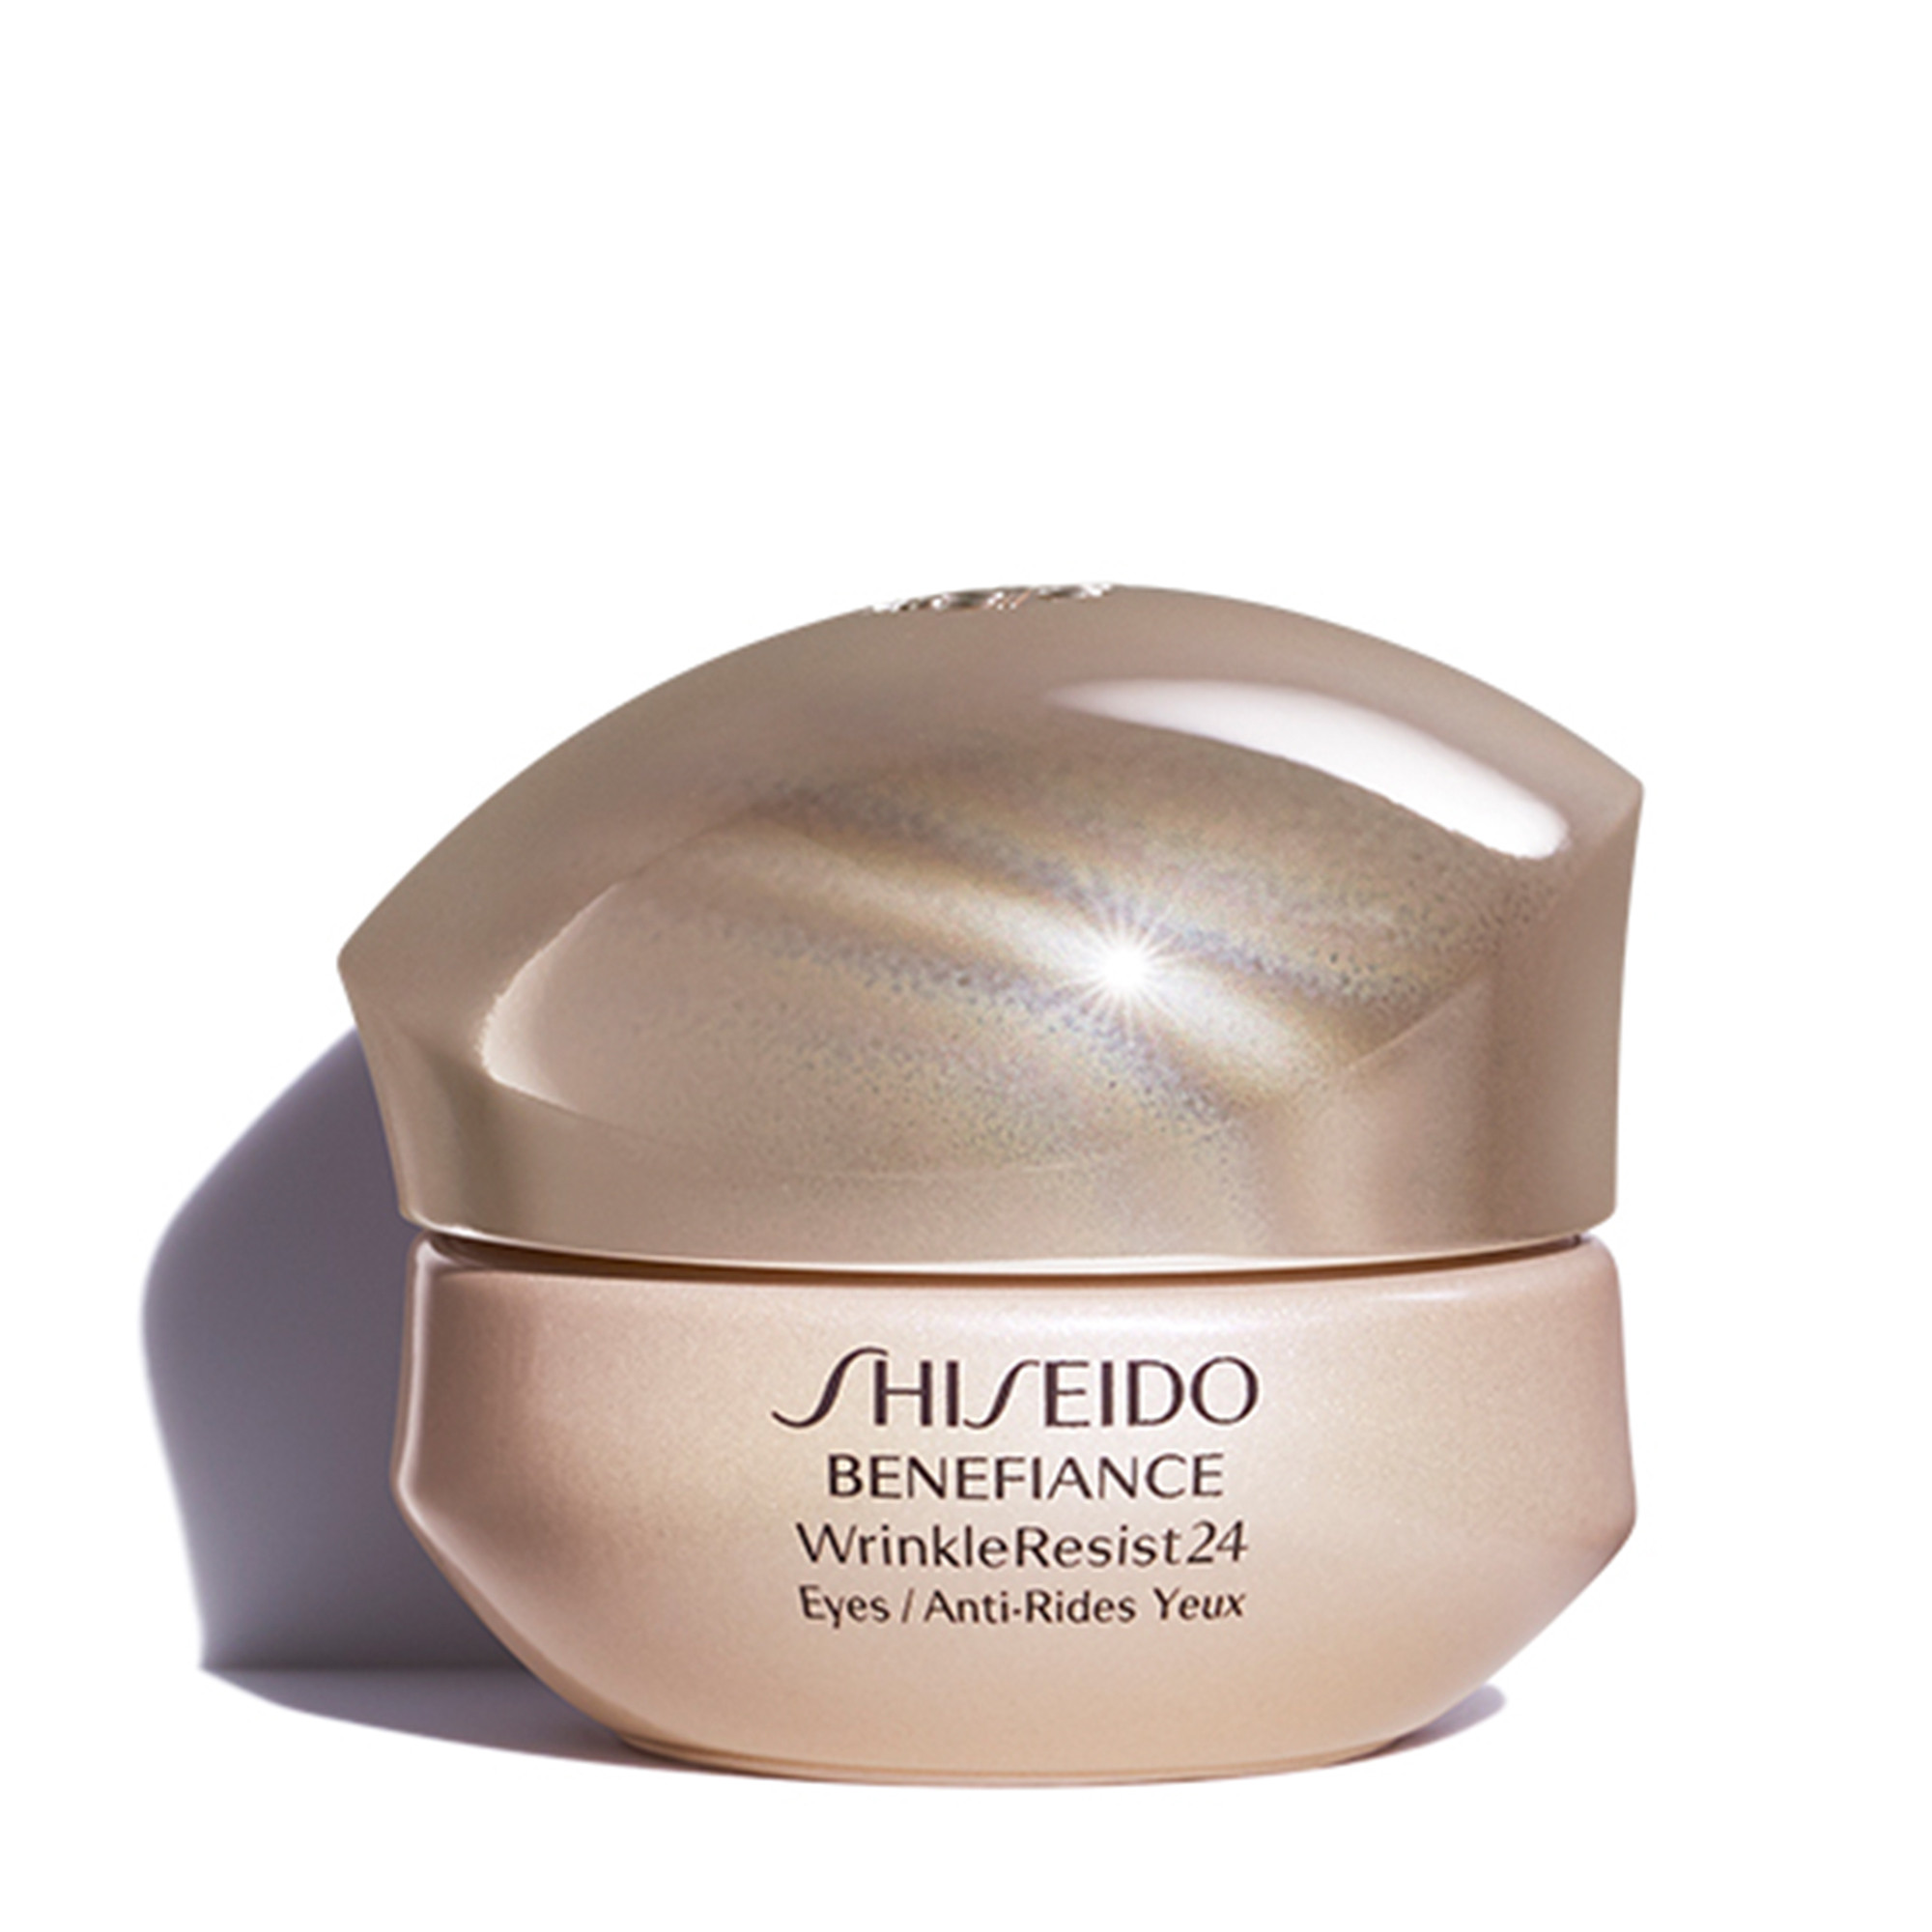 Шисейдо Benefiance Wrinkle resist 24. Shiseido Benefiance Eye. Shiseido Benefiance для глаз. Shiseido Benefiance Anti Wrinkle. Крем shiseido отзывы